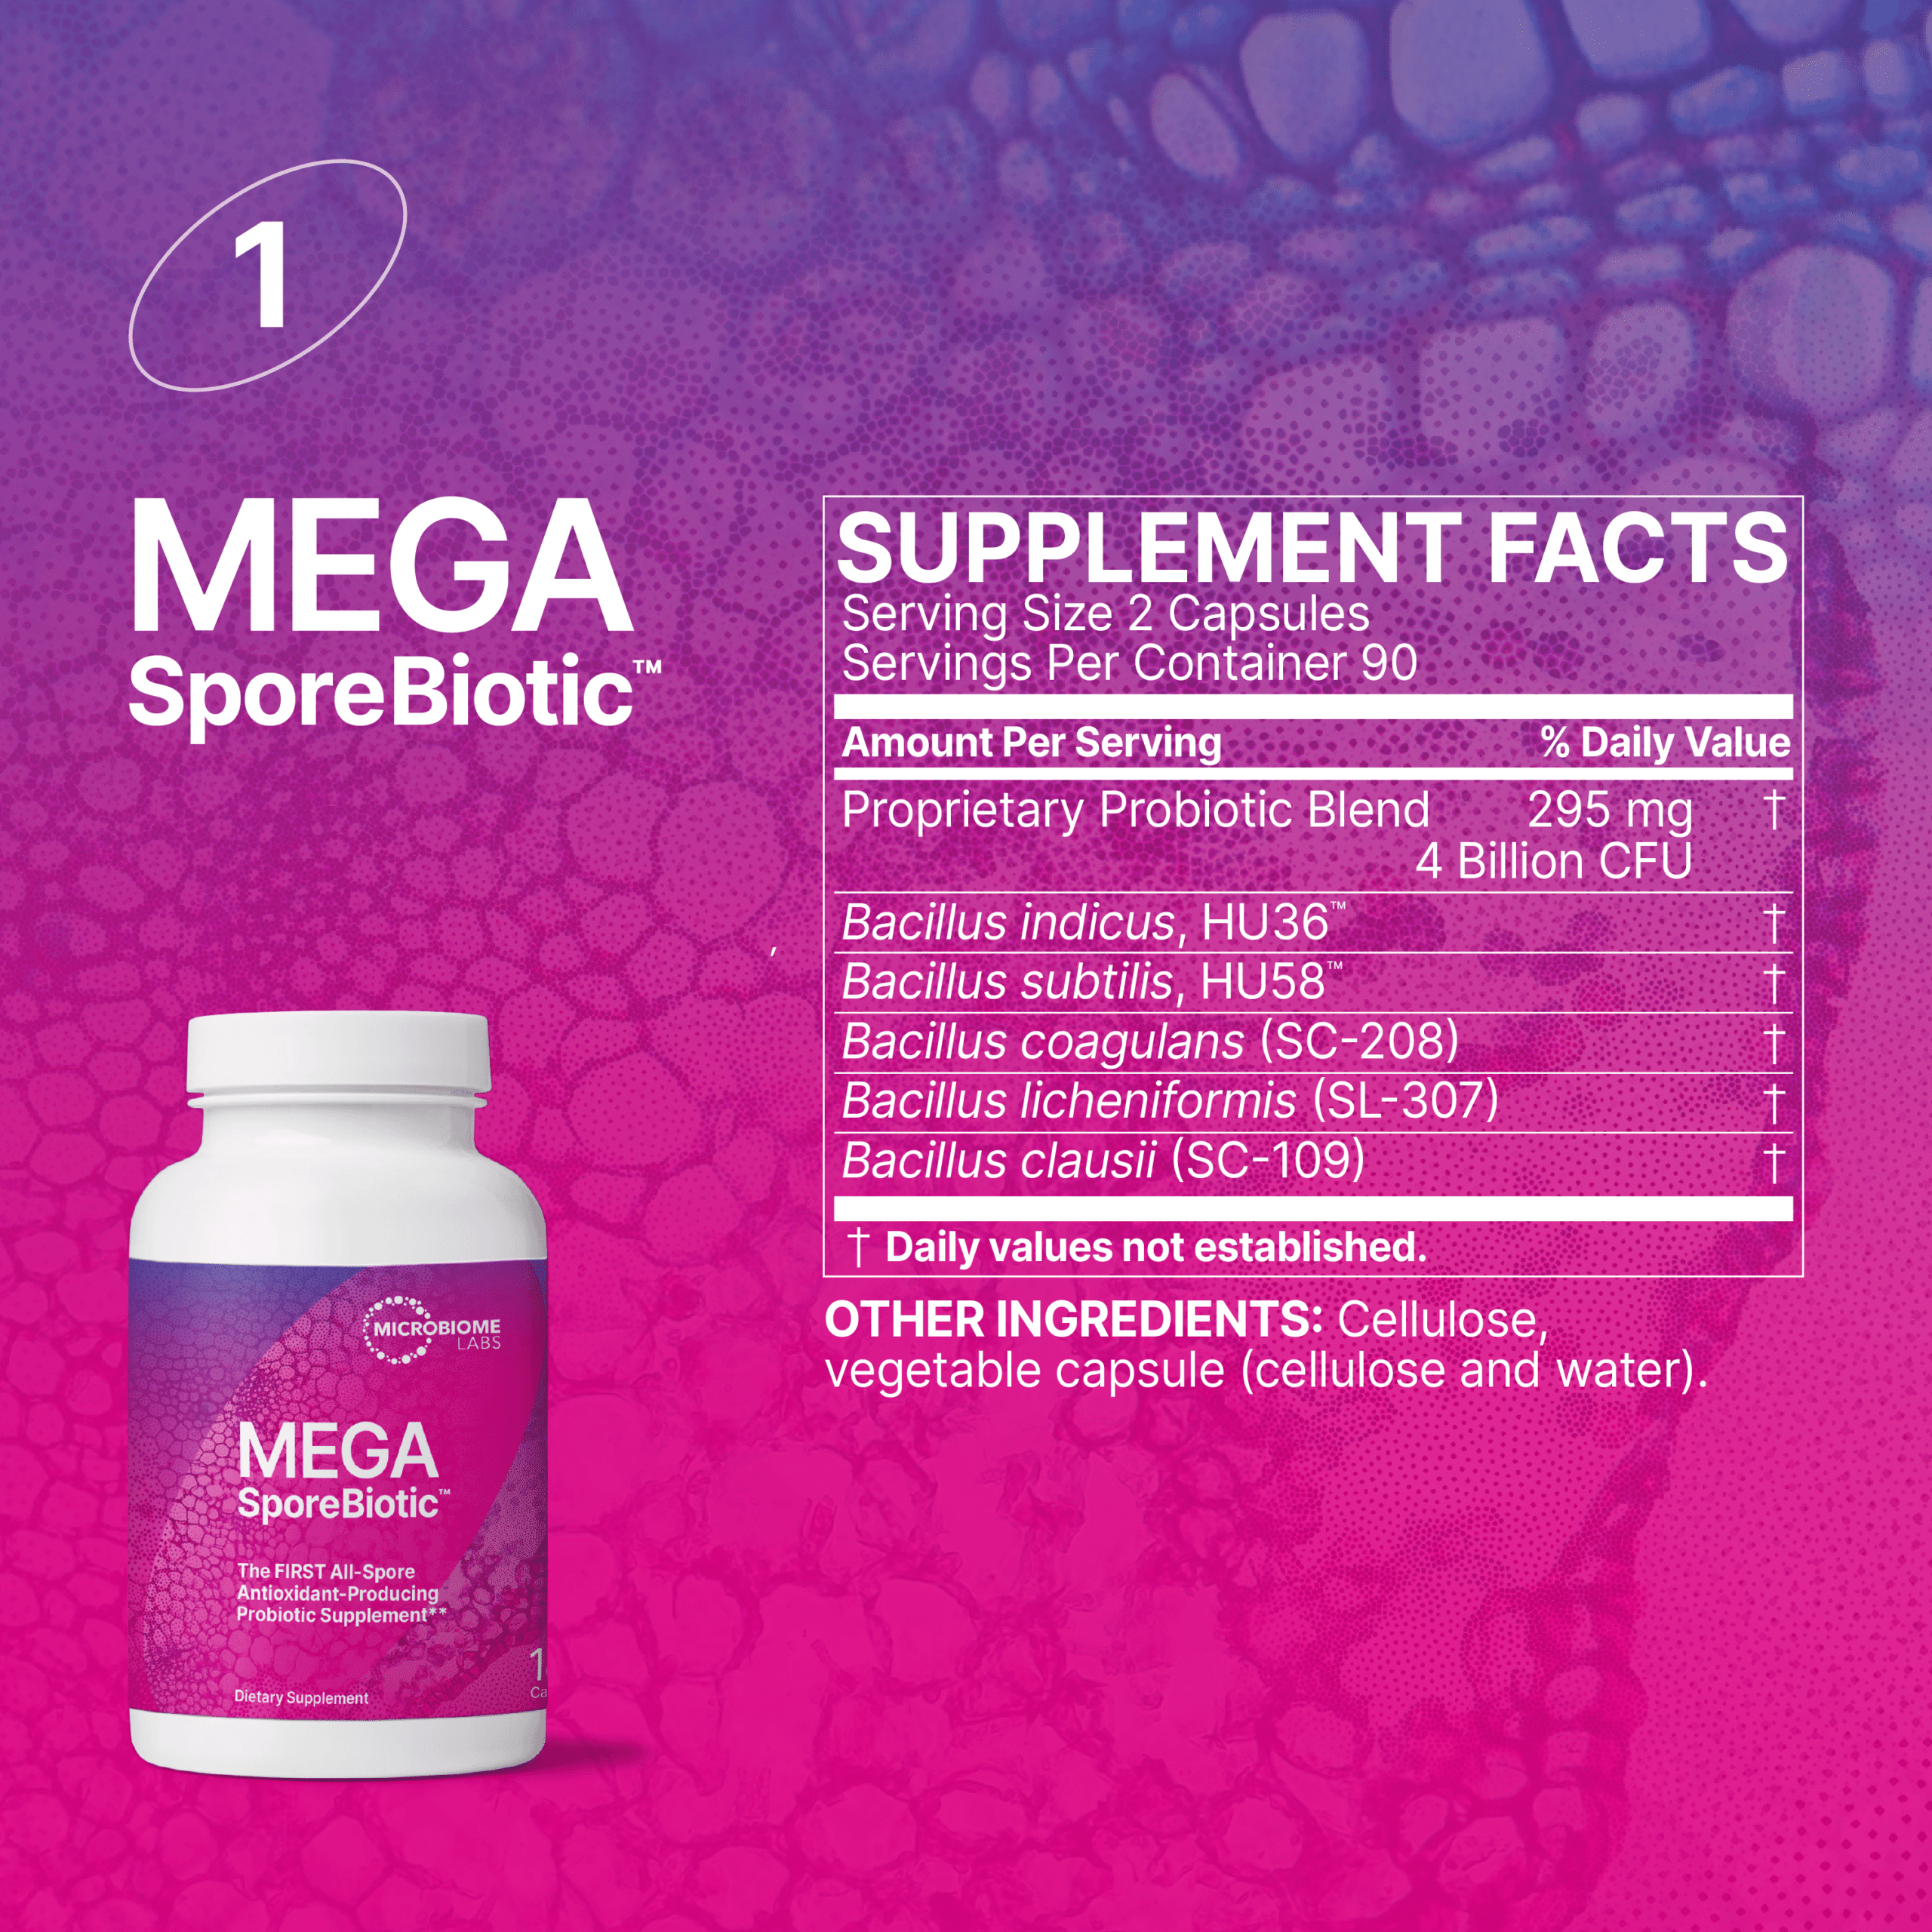 megasporebiotic-supplement-facts